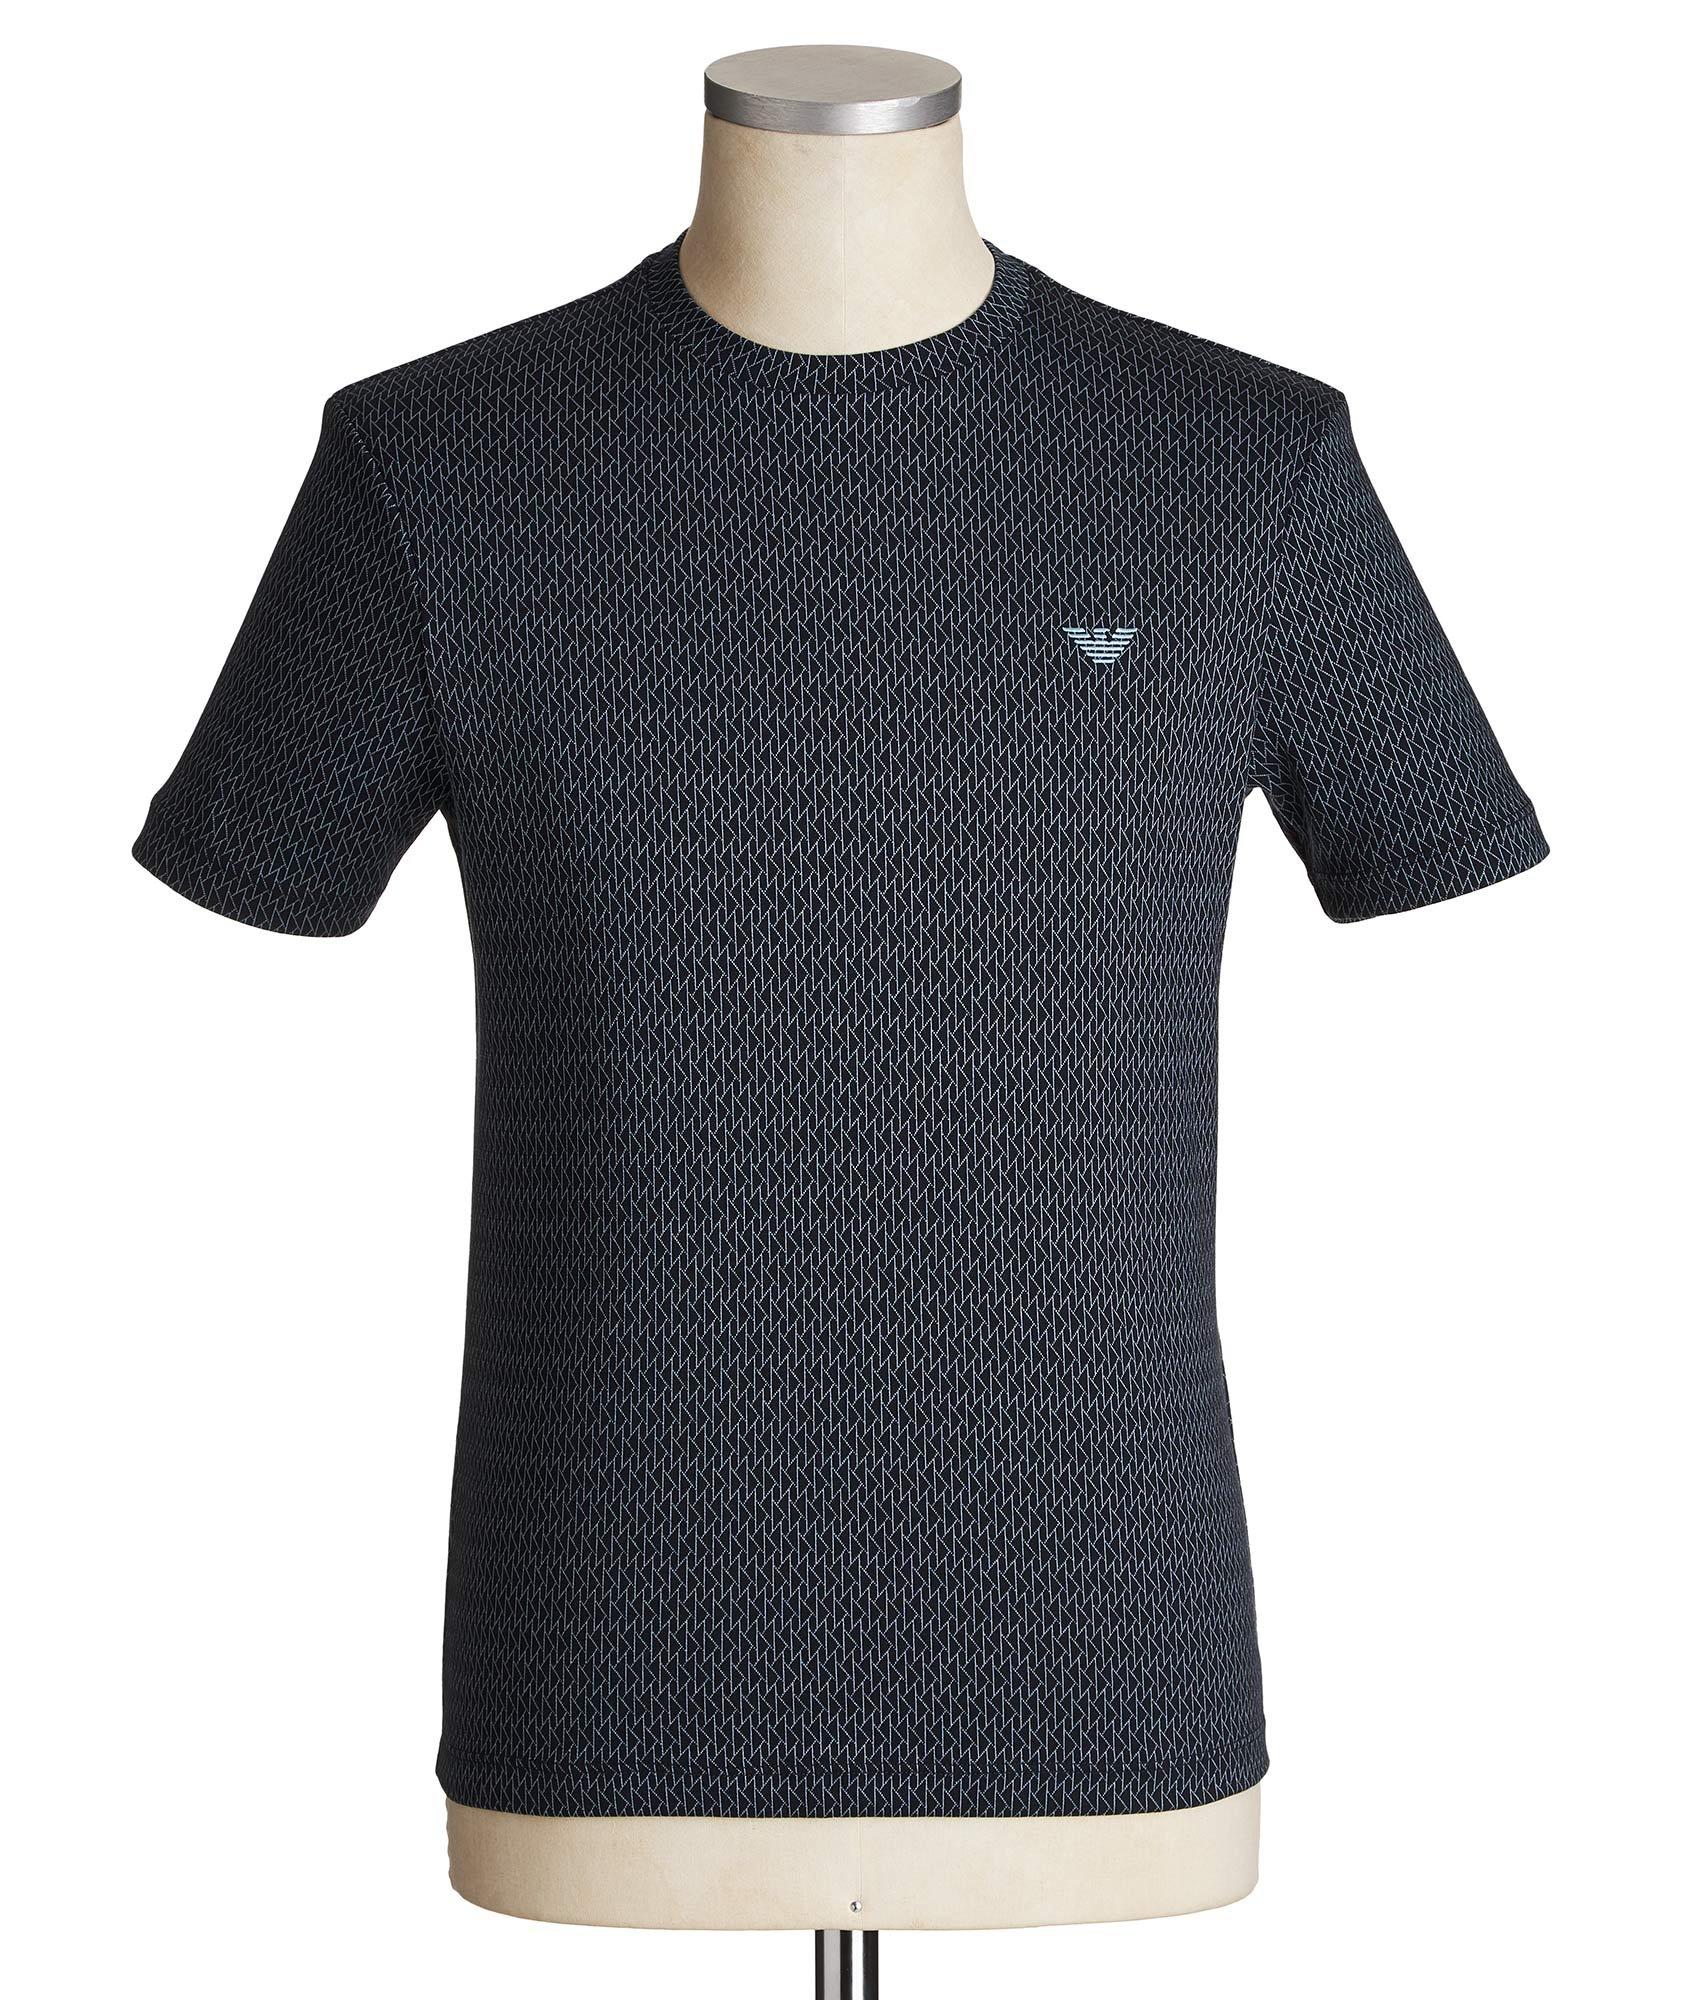 Geometric-Printed Cotton T-Shirt image 0